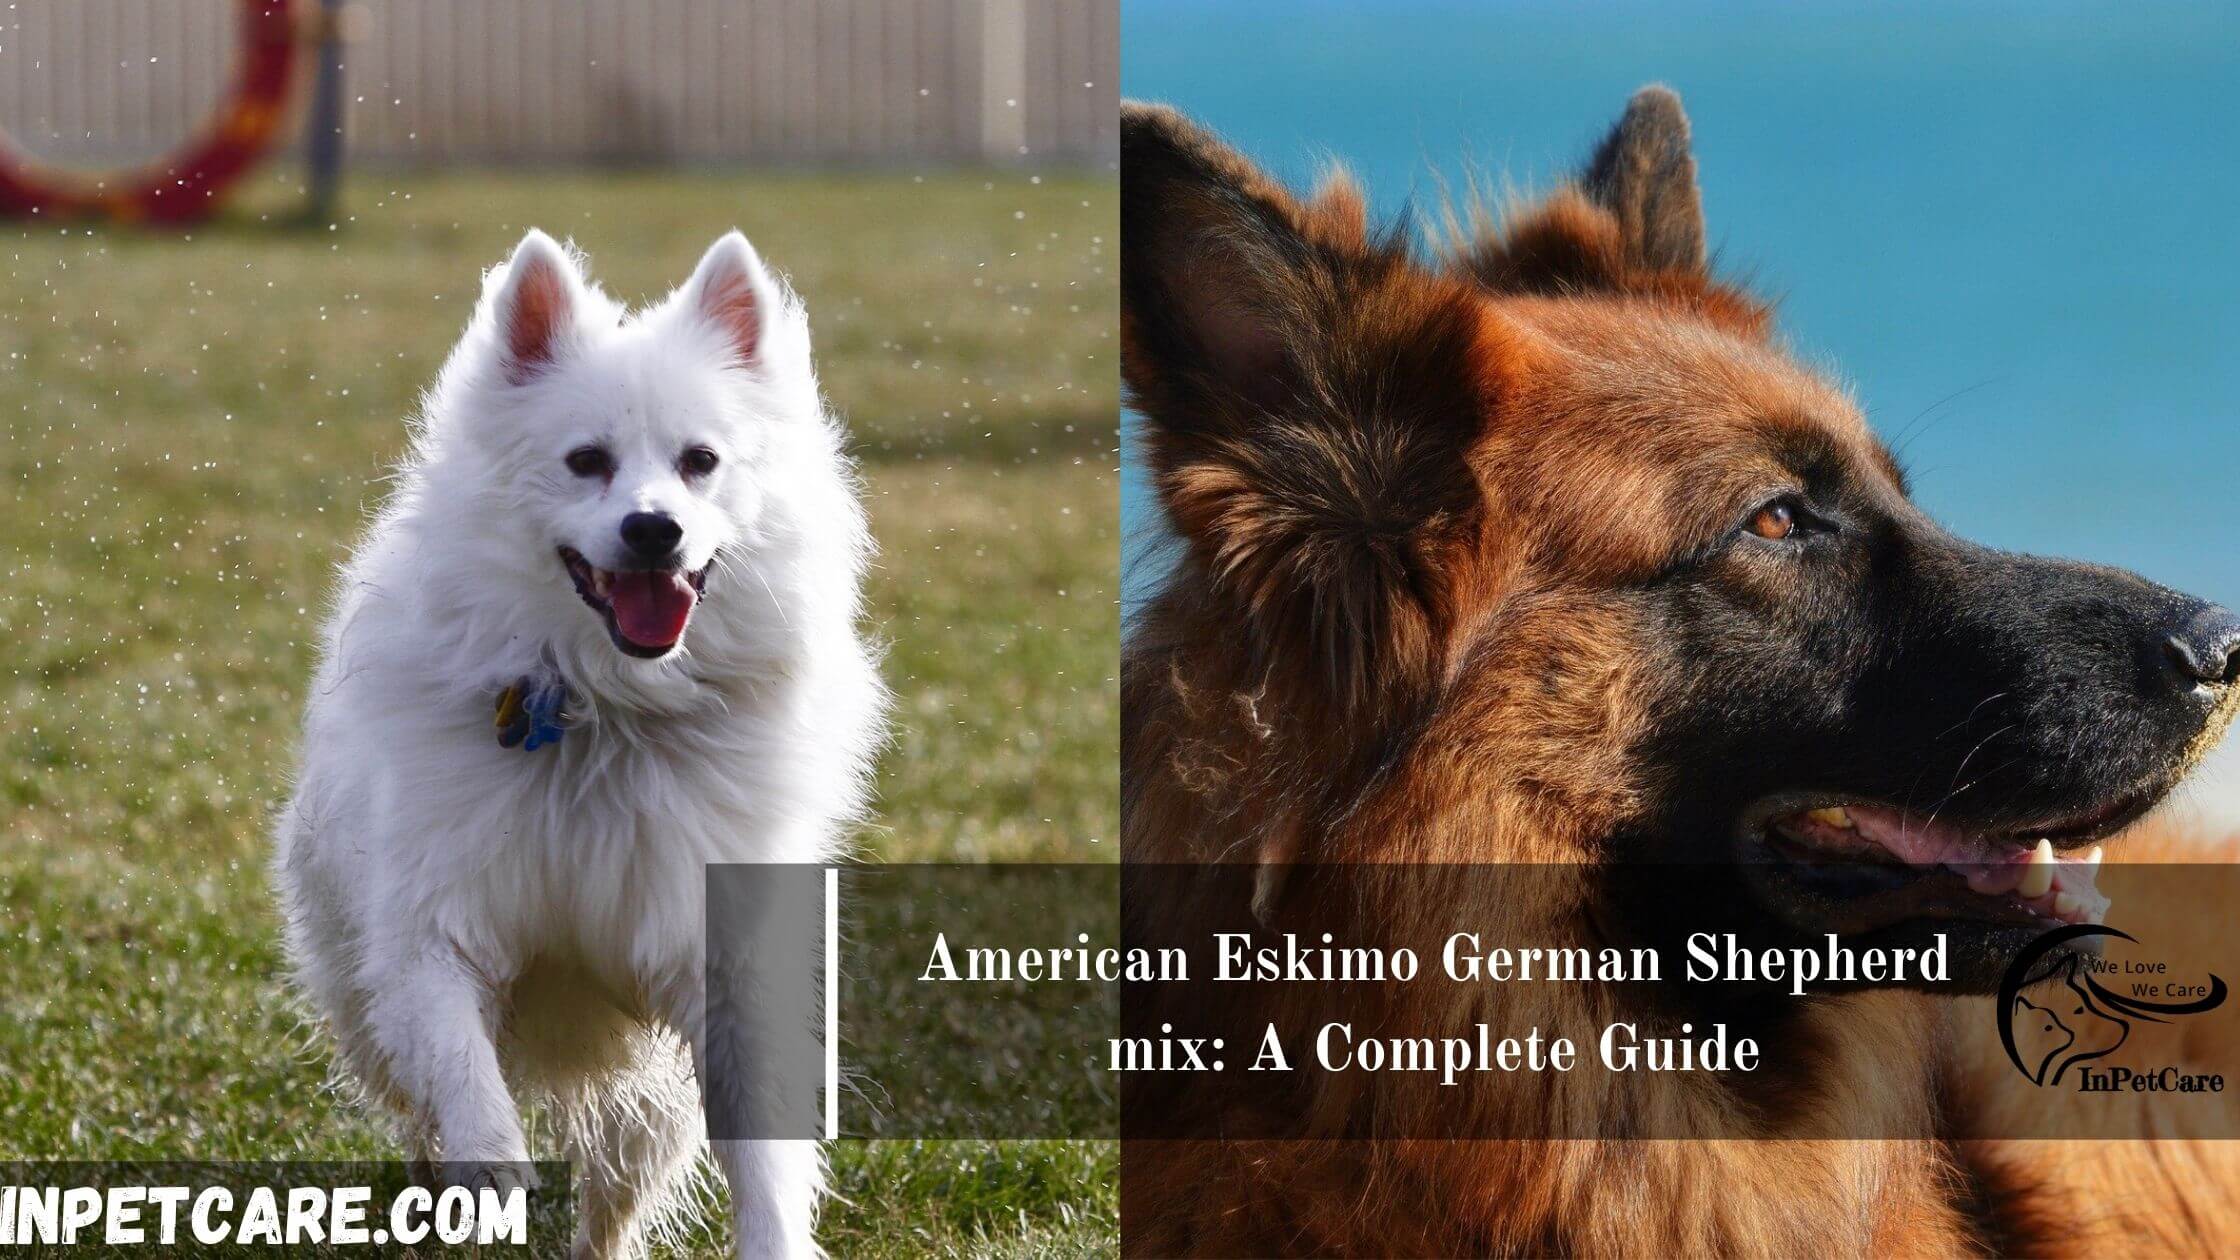 American Eskimo German Shepherd mix: A Complete Guide